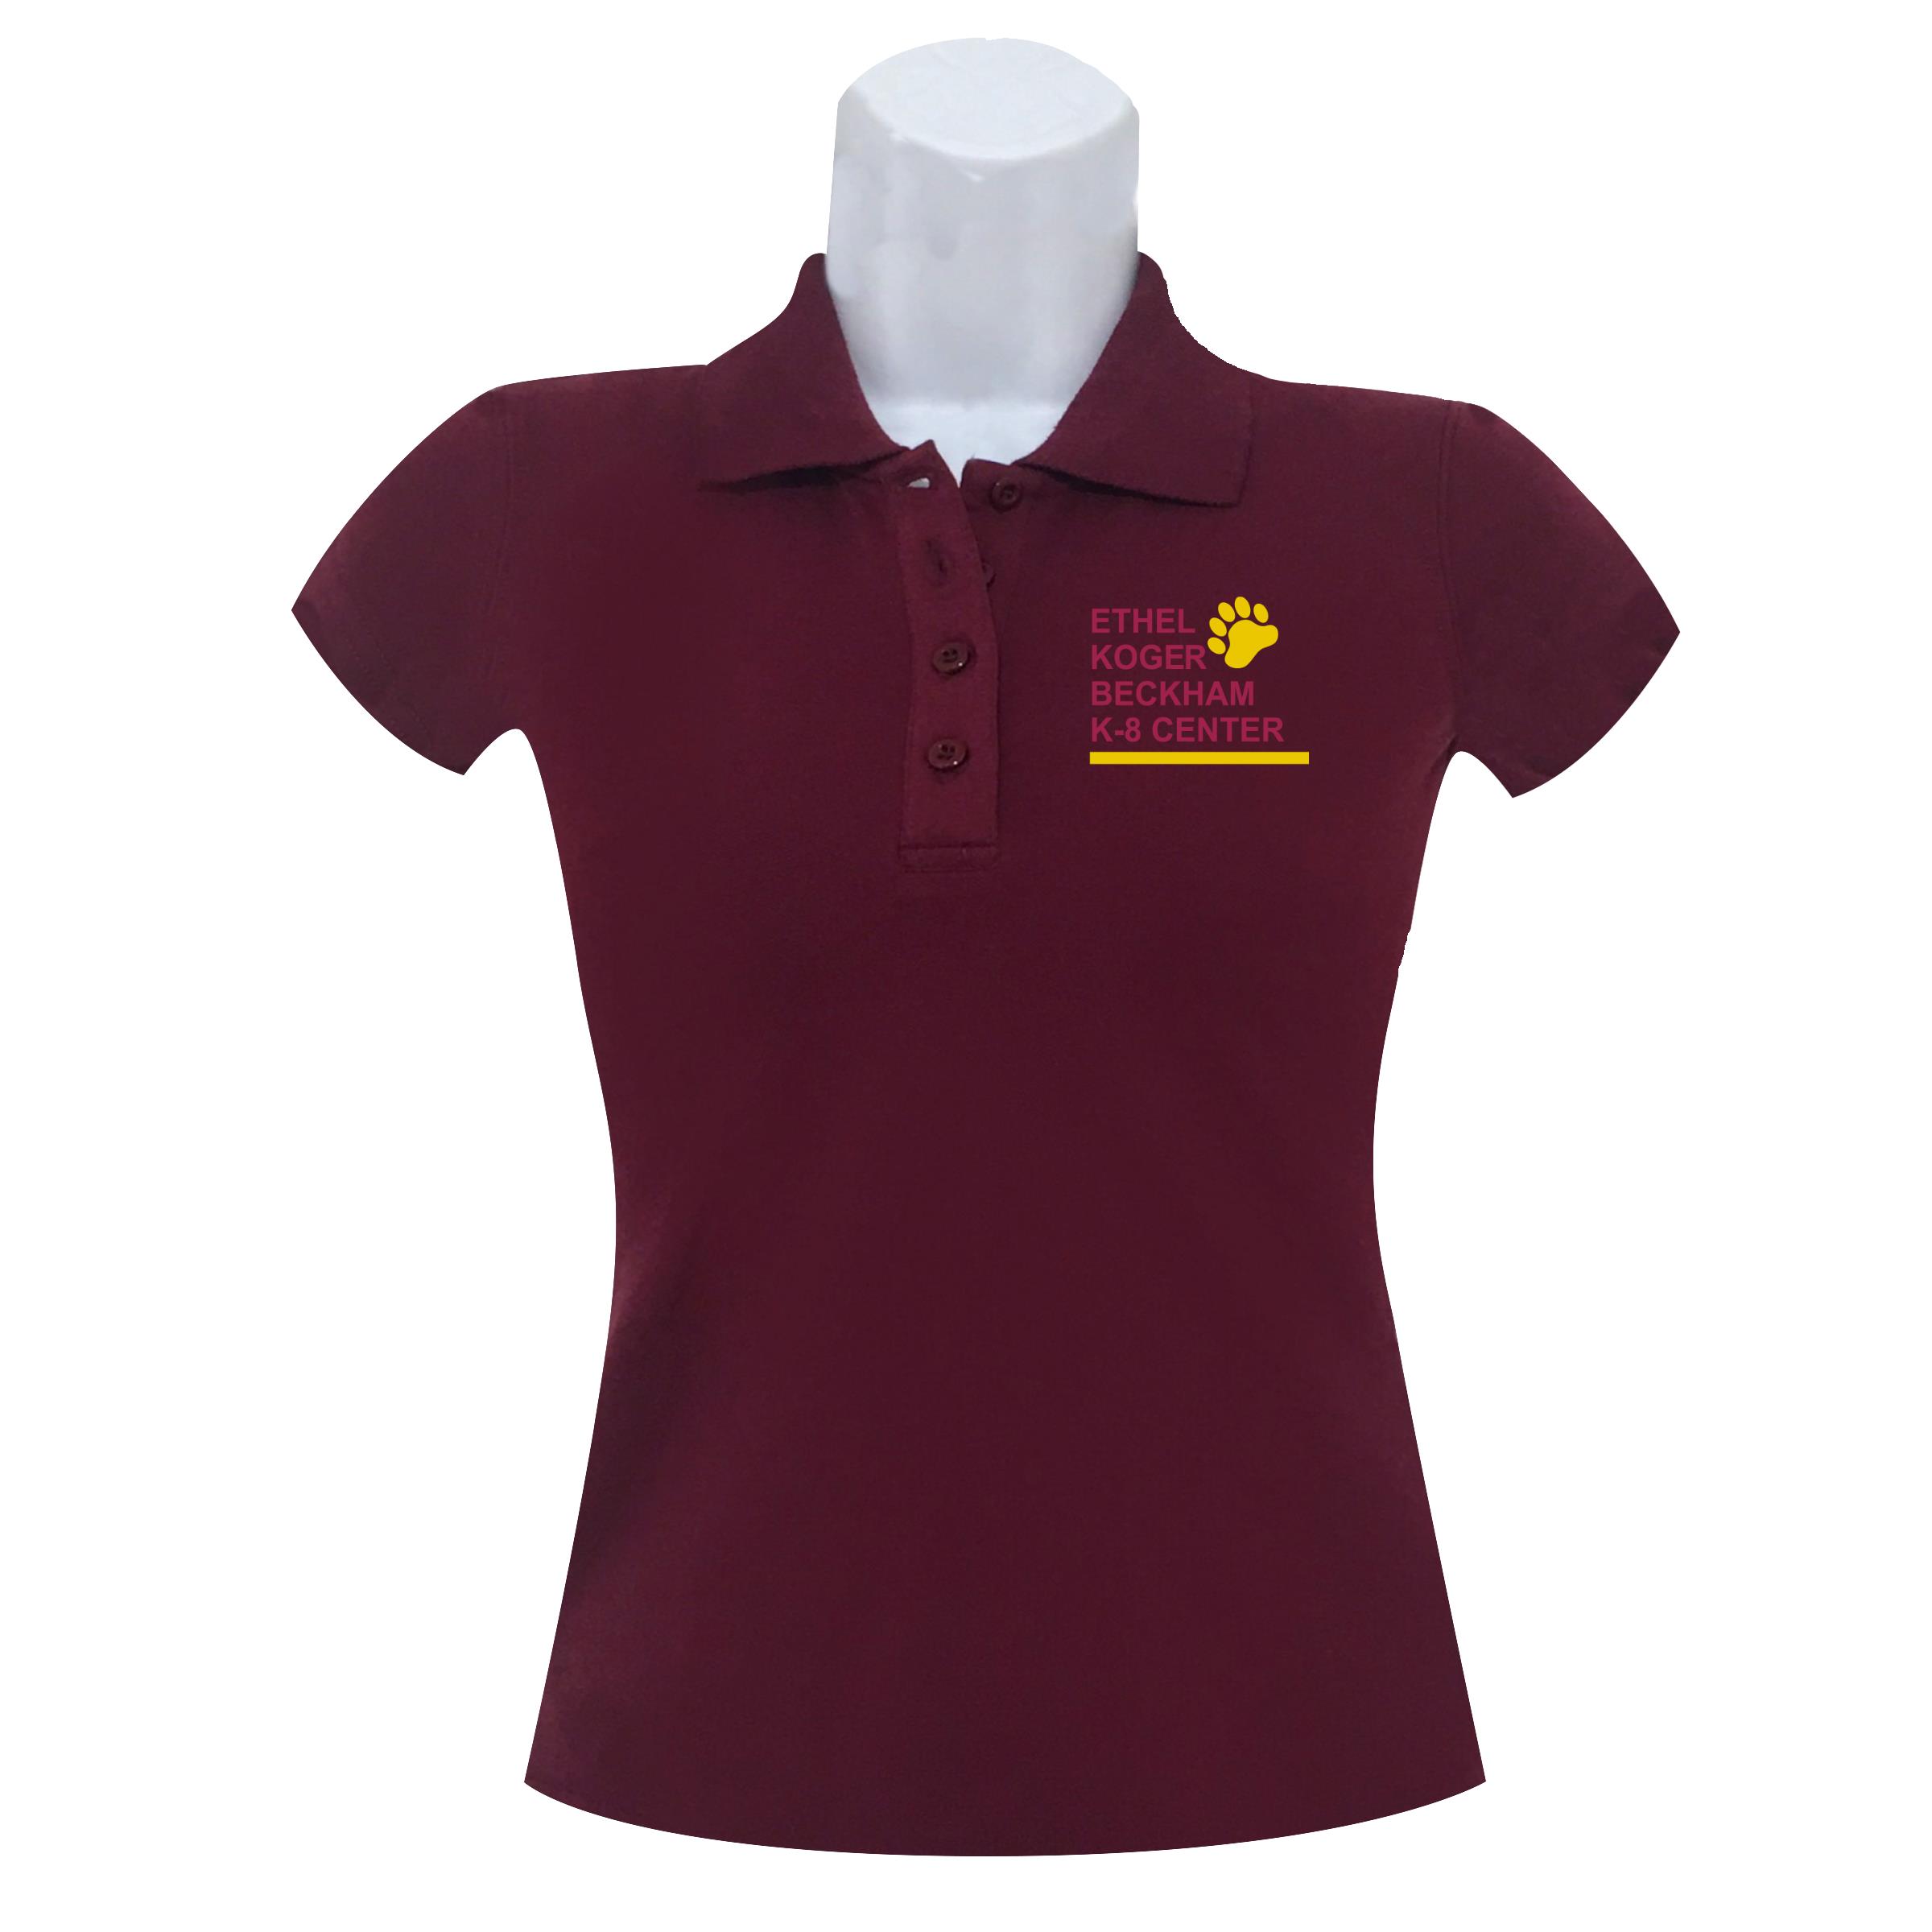 Ibiley Uniforms & More - #1 Online Retailer for Boys & Girls School ...